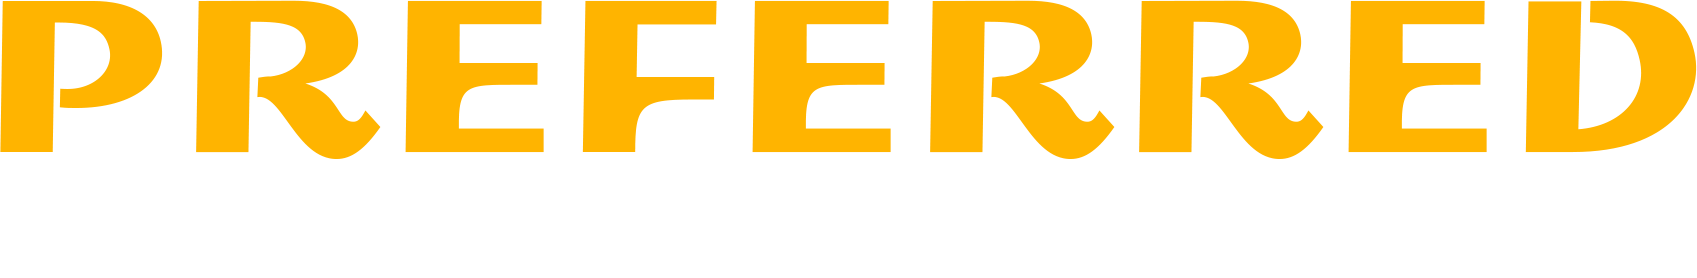 Preferred Carpet Care Inc - Logo